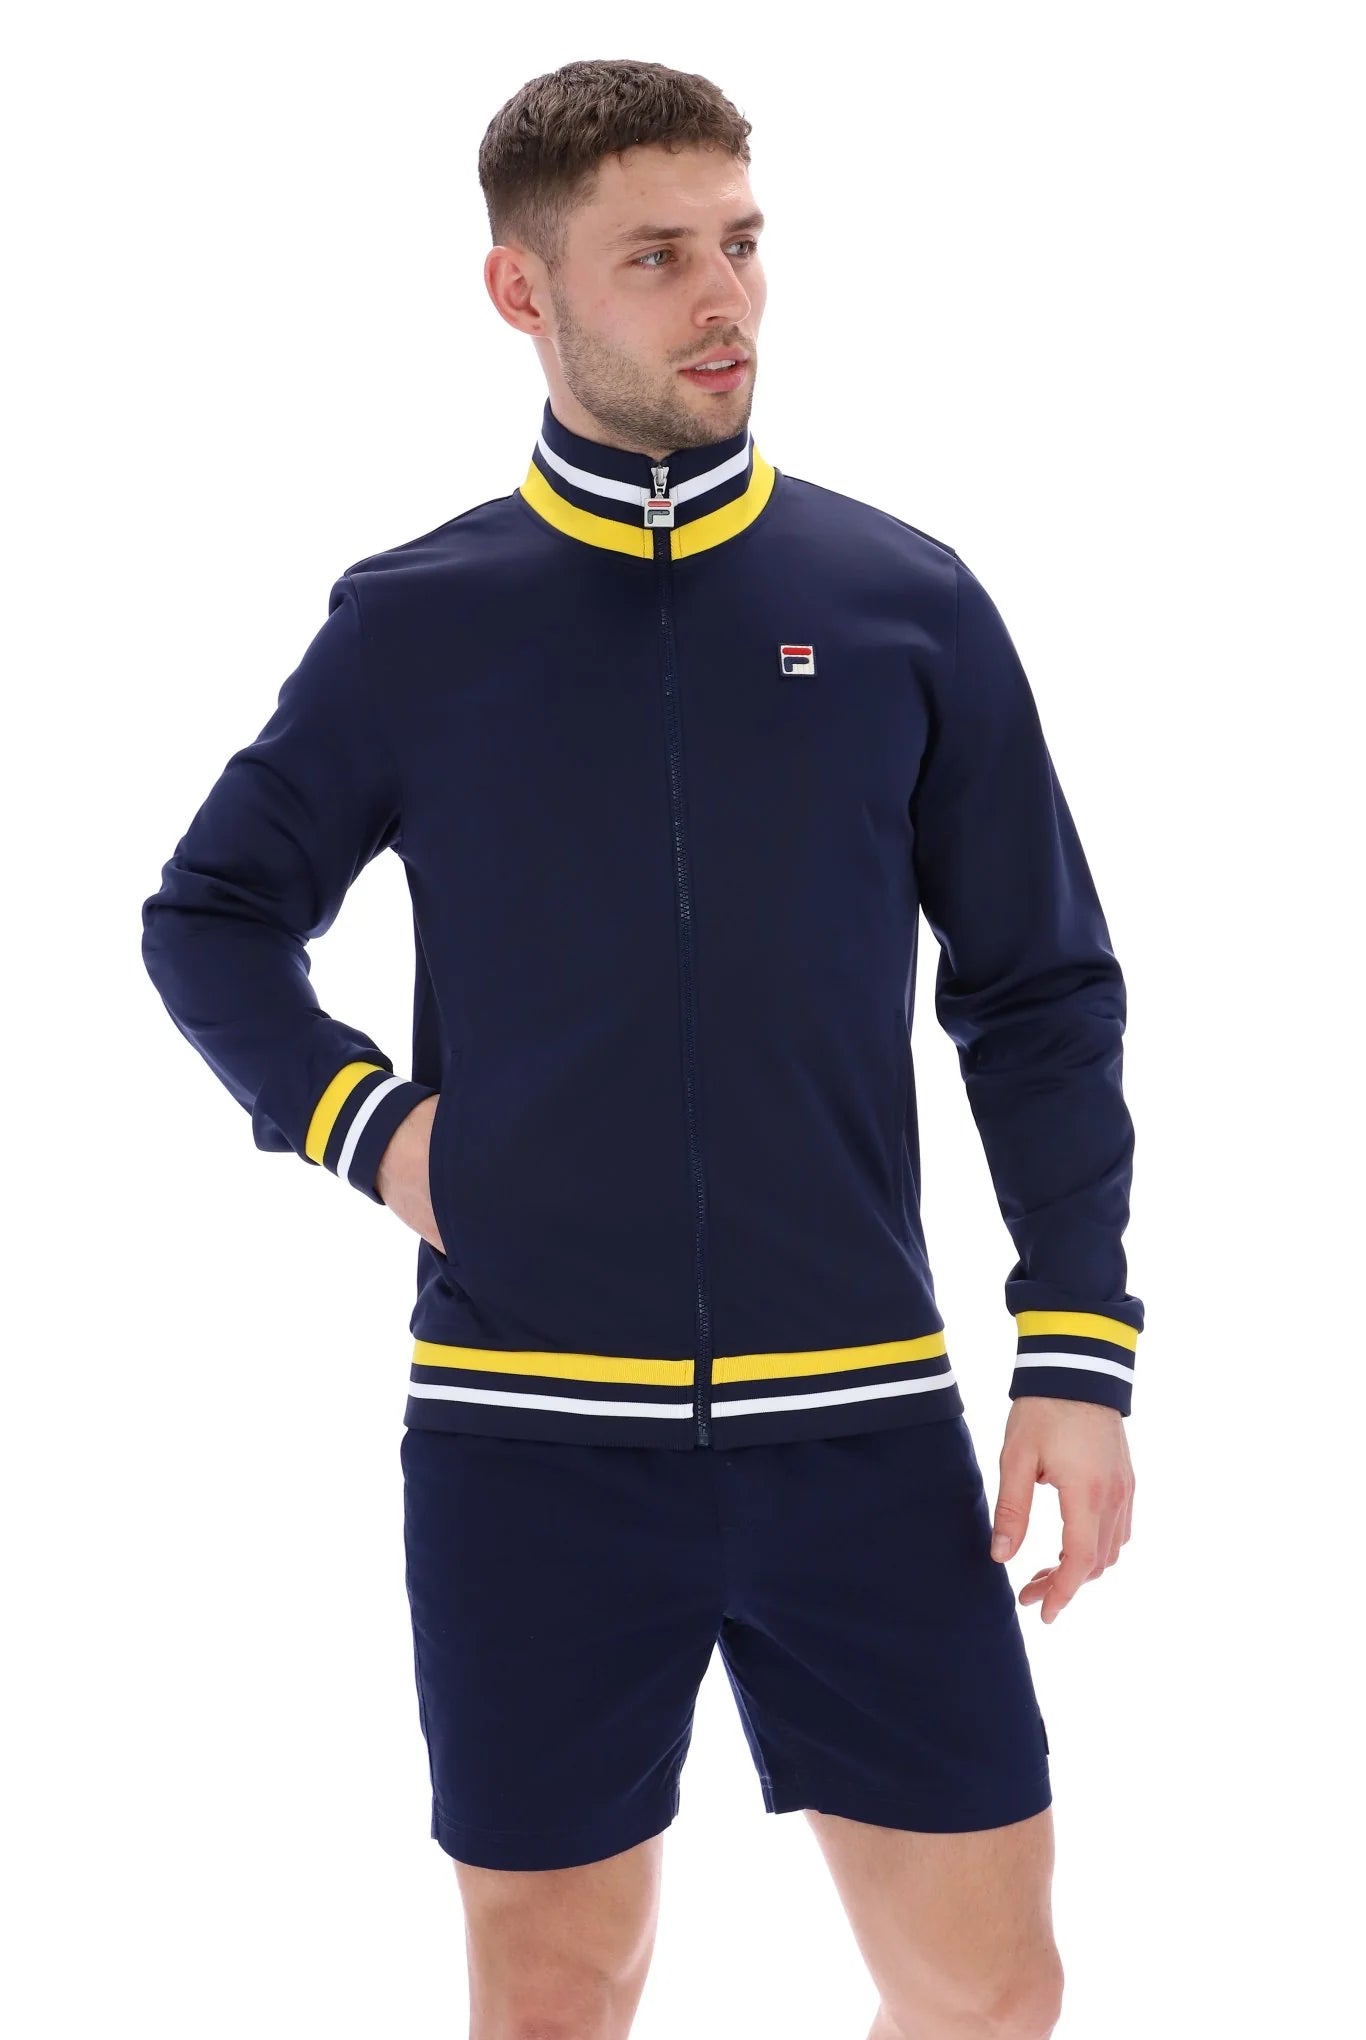 FILA Dane Track Top Jacket Navy - Raw Menswear